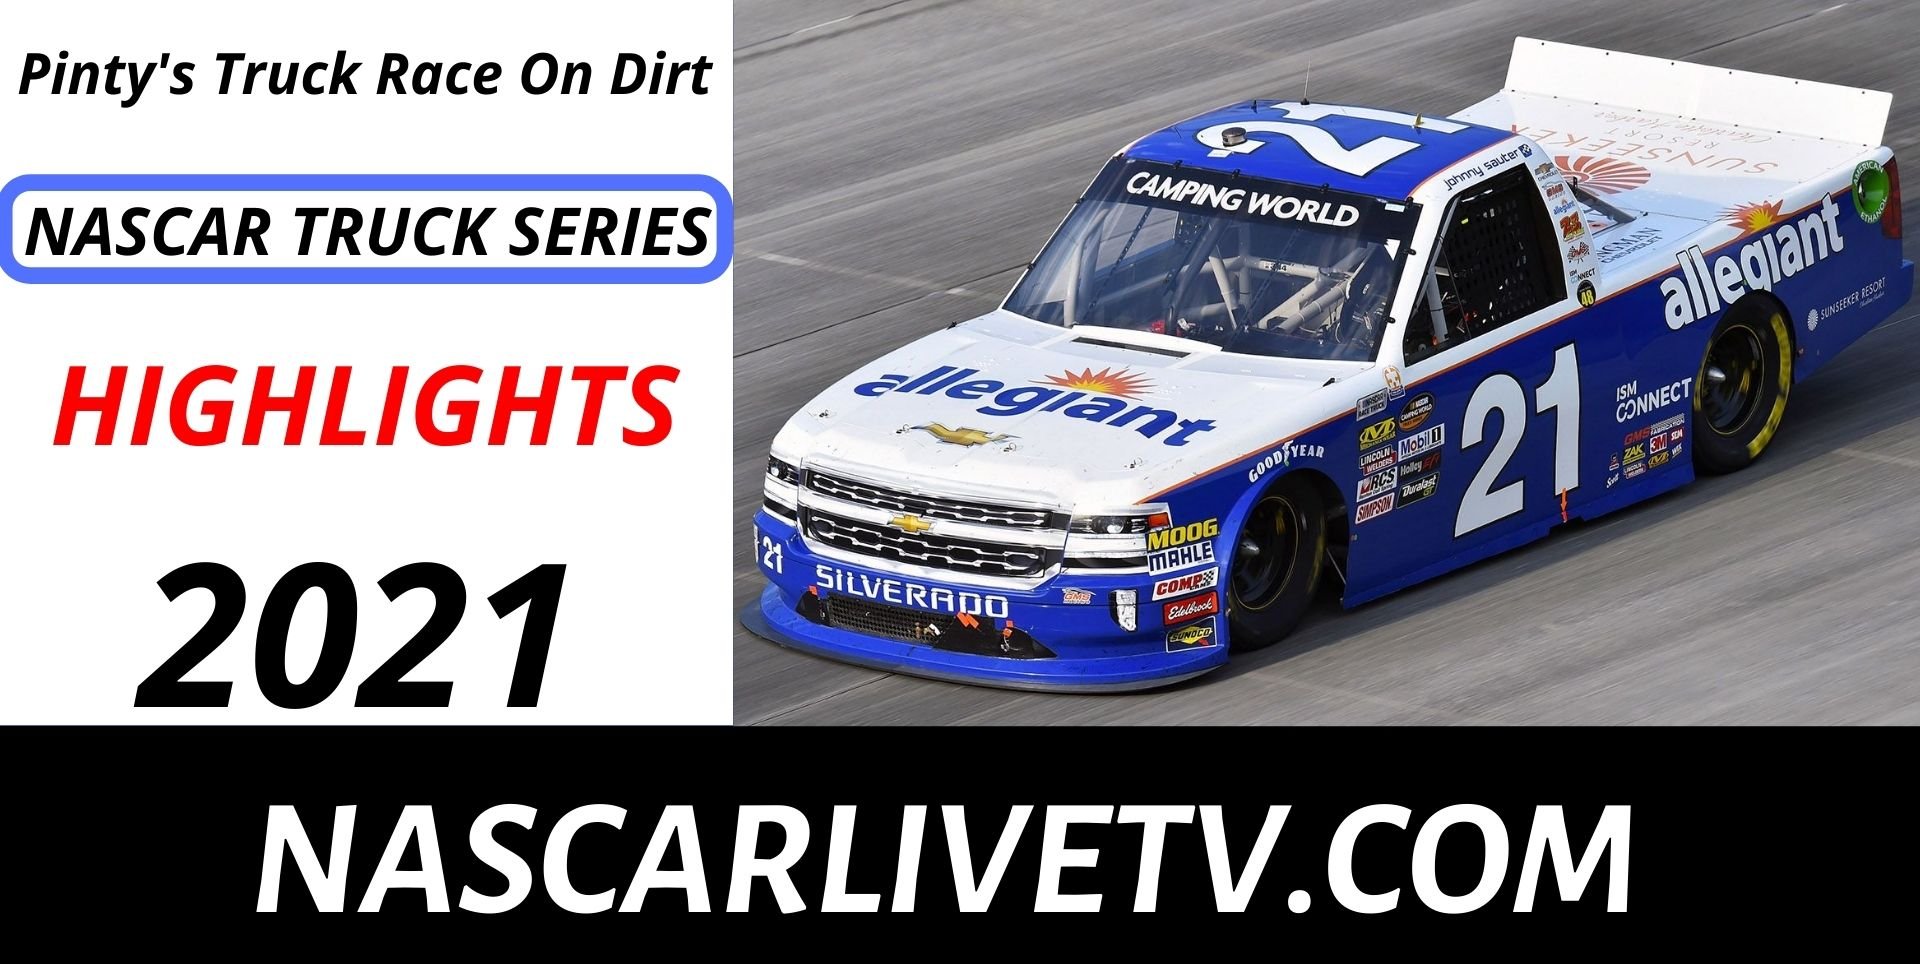 Pintys Truck Race On Dirt Highlights NASCAR Truck 2021